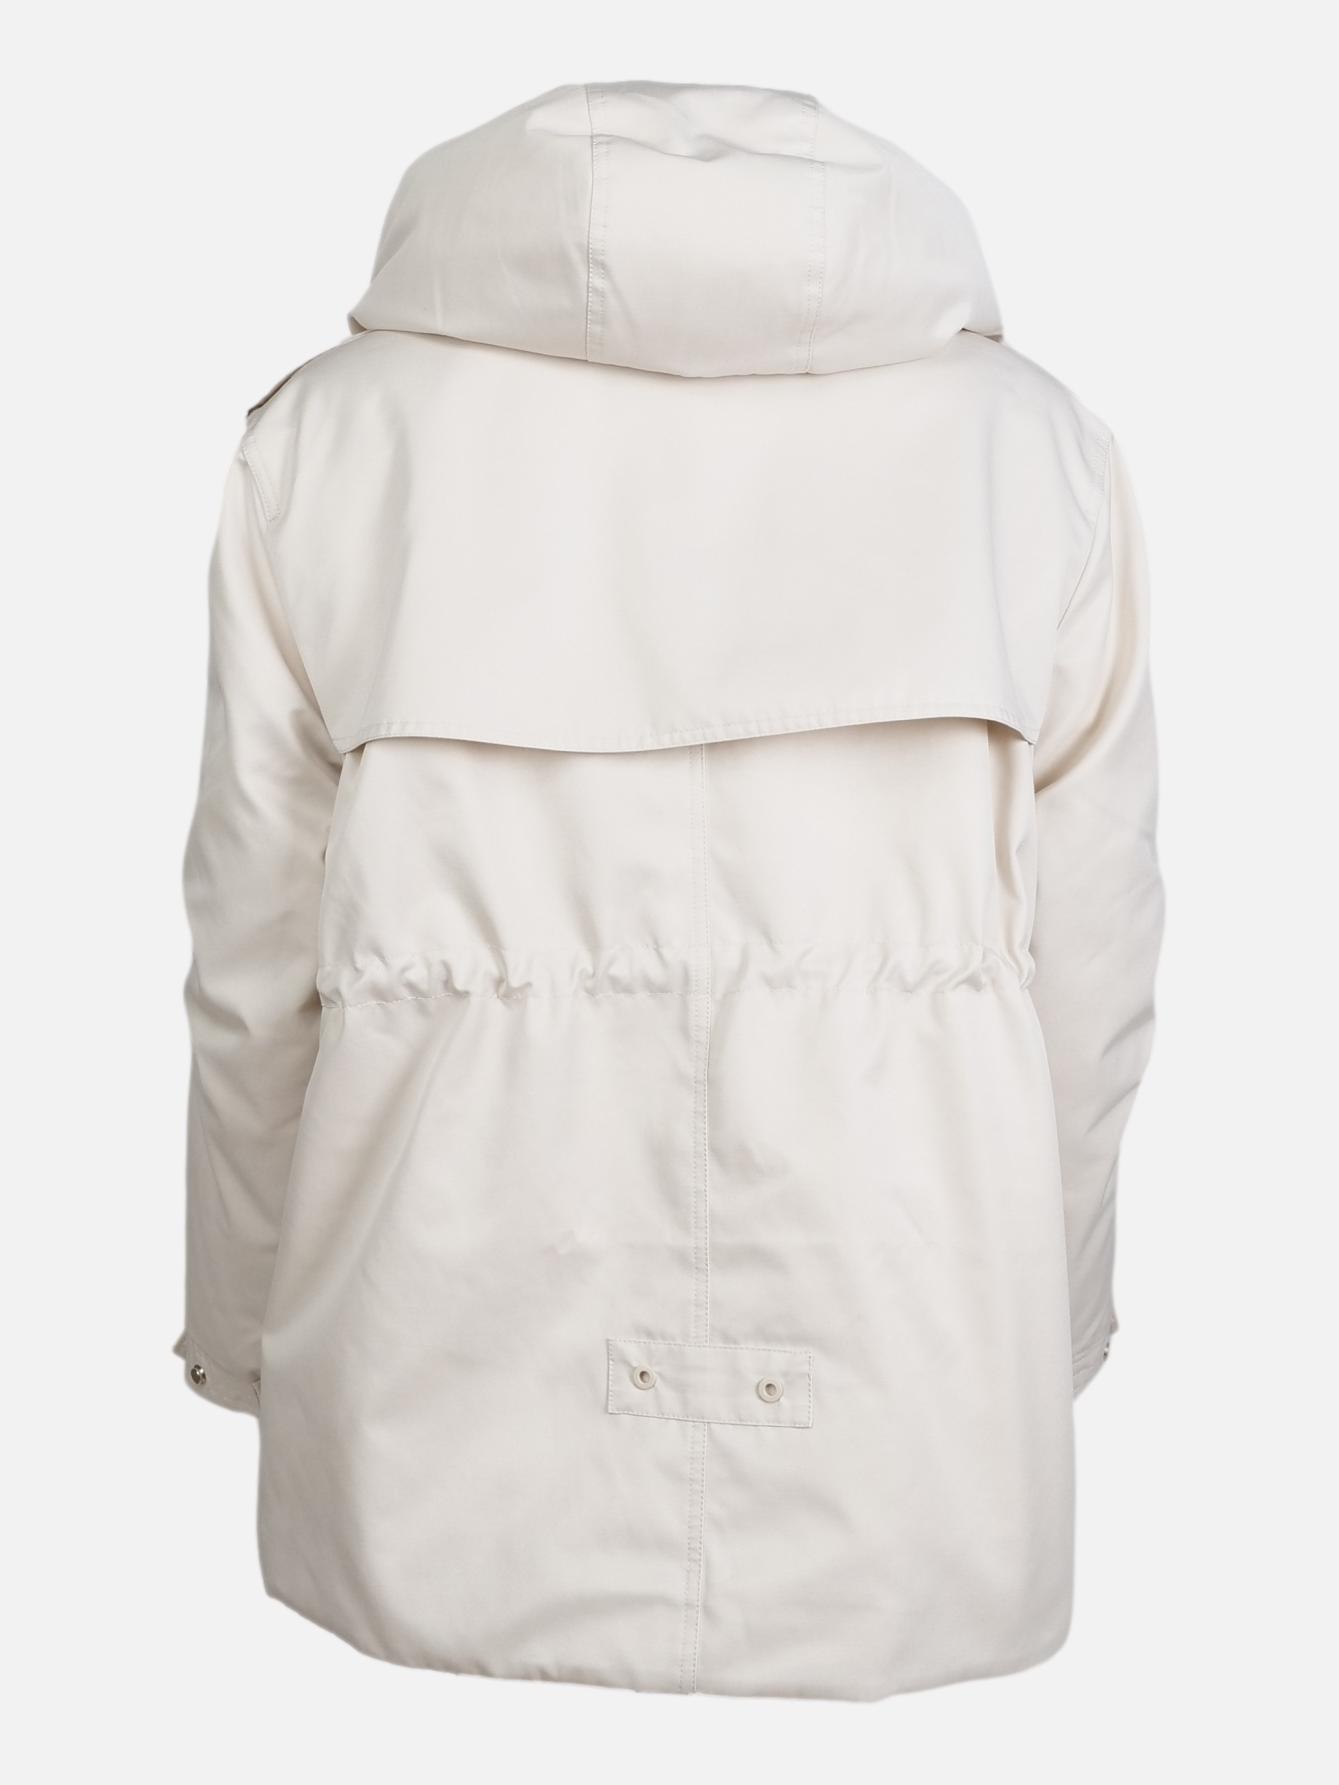 Honfleur, 77cm OFF WHITE - Textile - Women - Off White